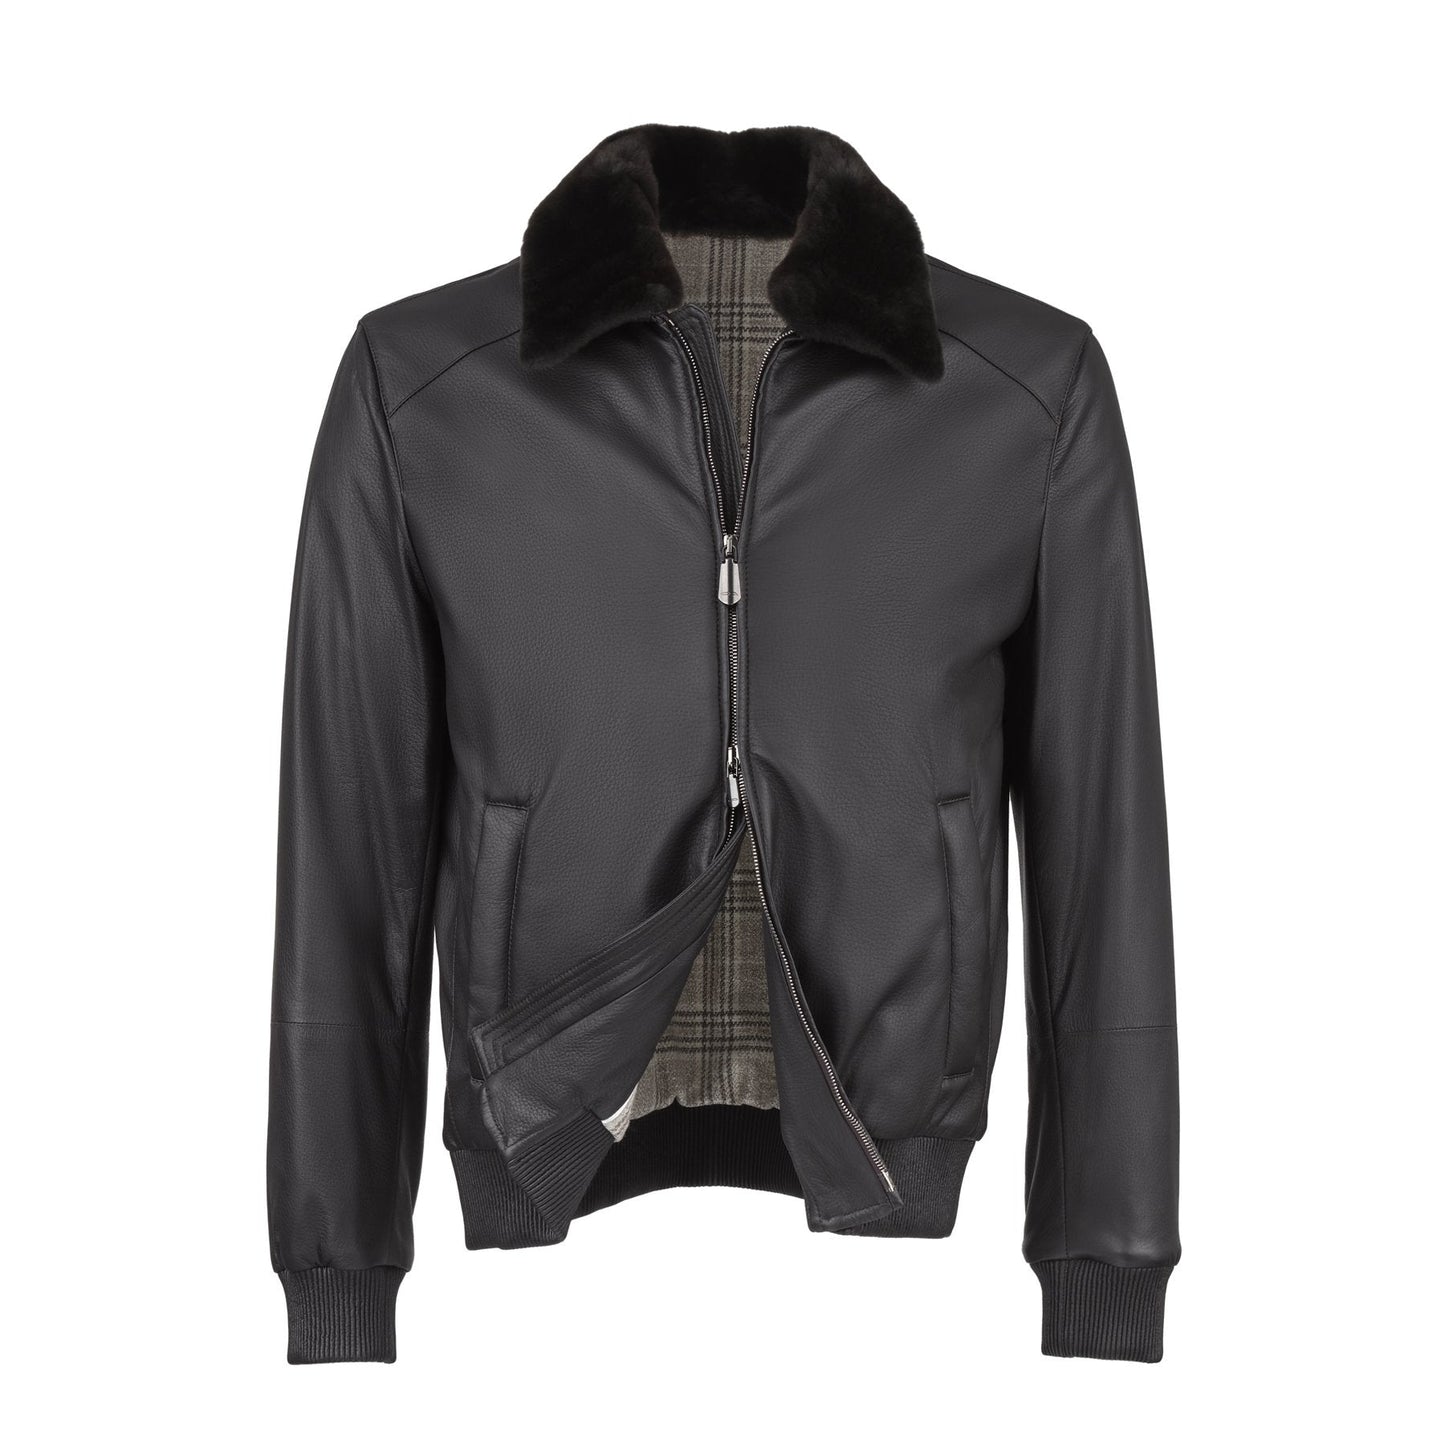 Cesare Attolini Leather Bomber Jacket with Fur Collar in Dark Grey - SARTALE